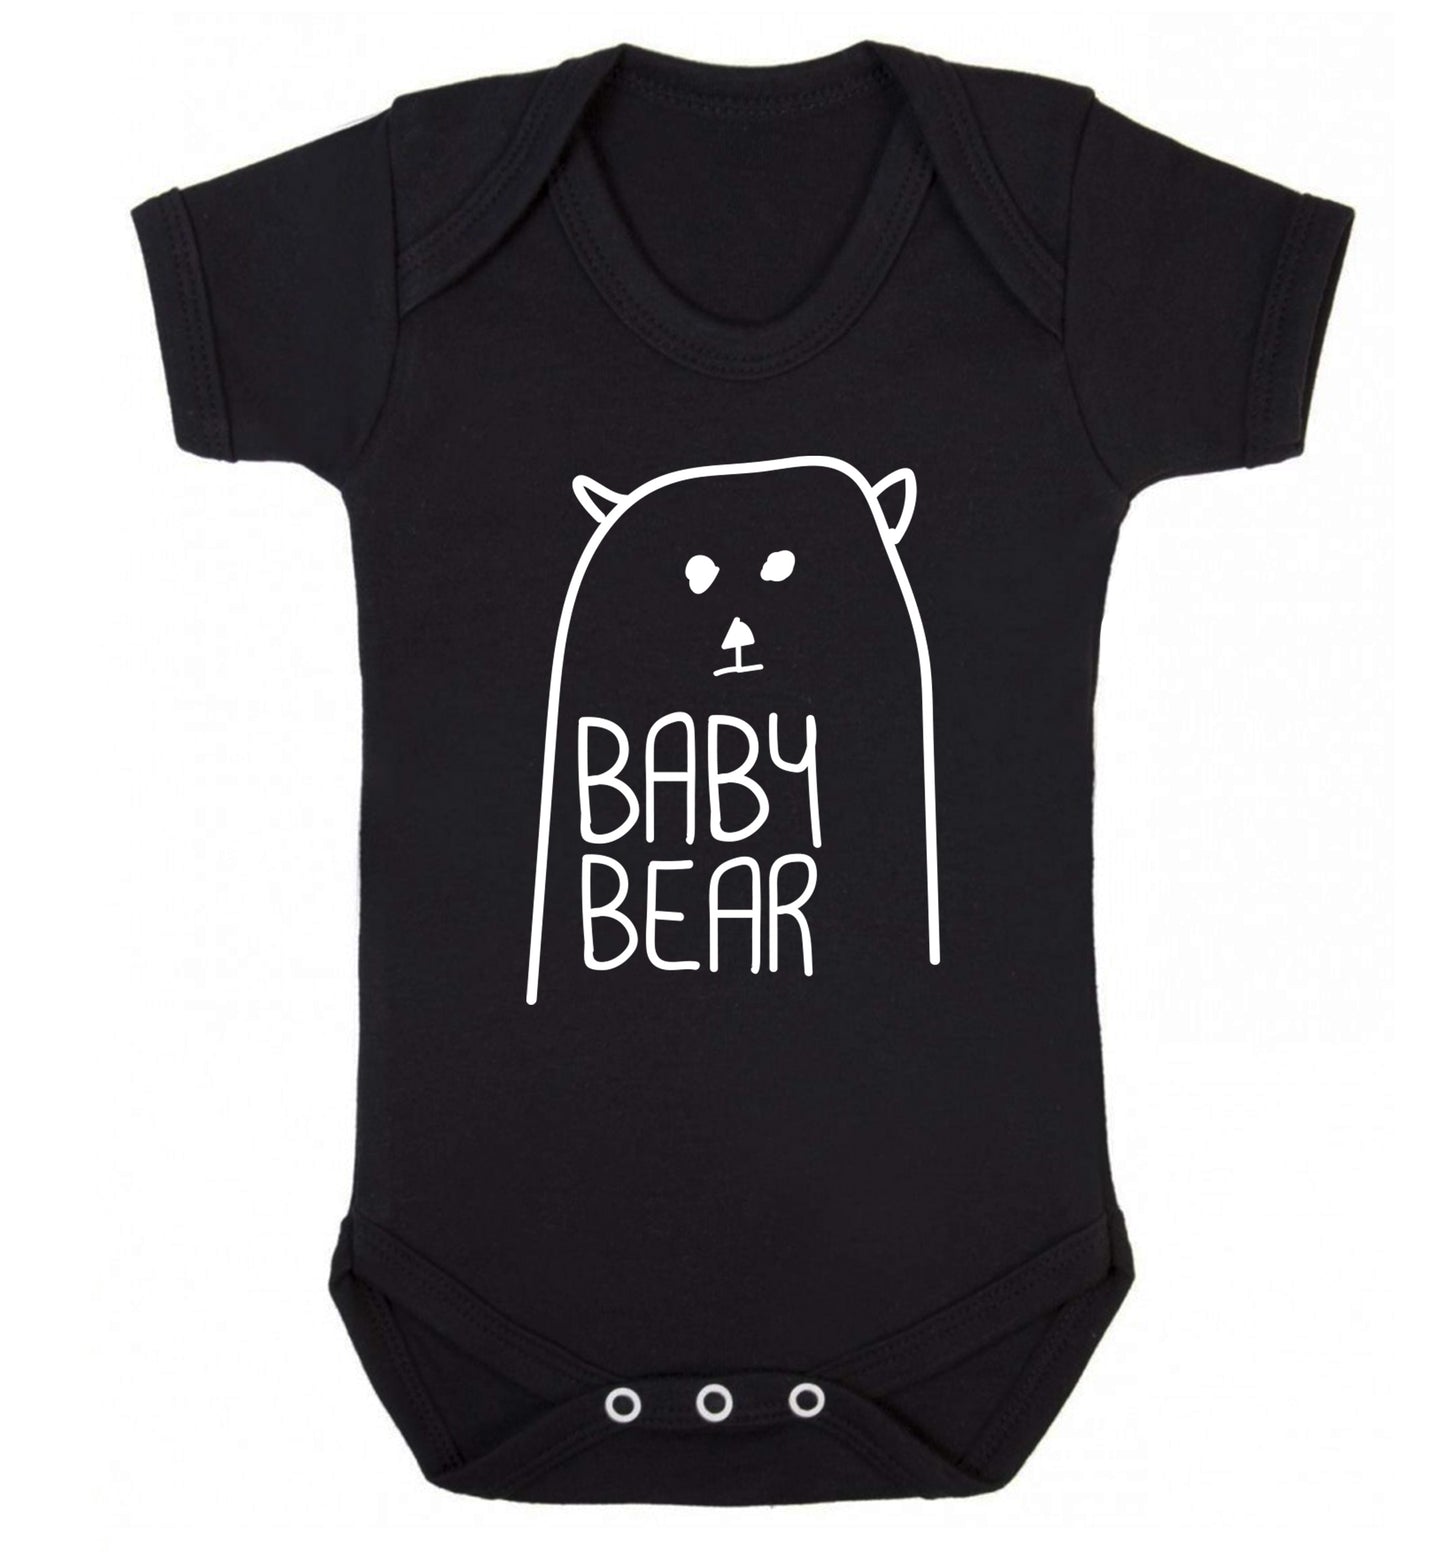 Baby bear Baby Vest black 18-24 months